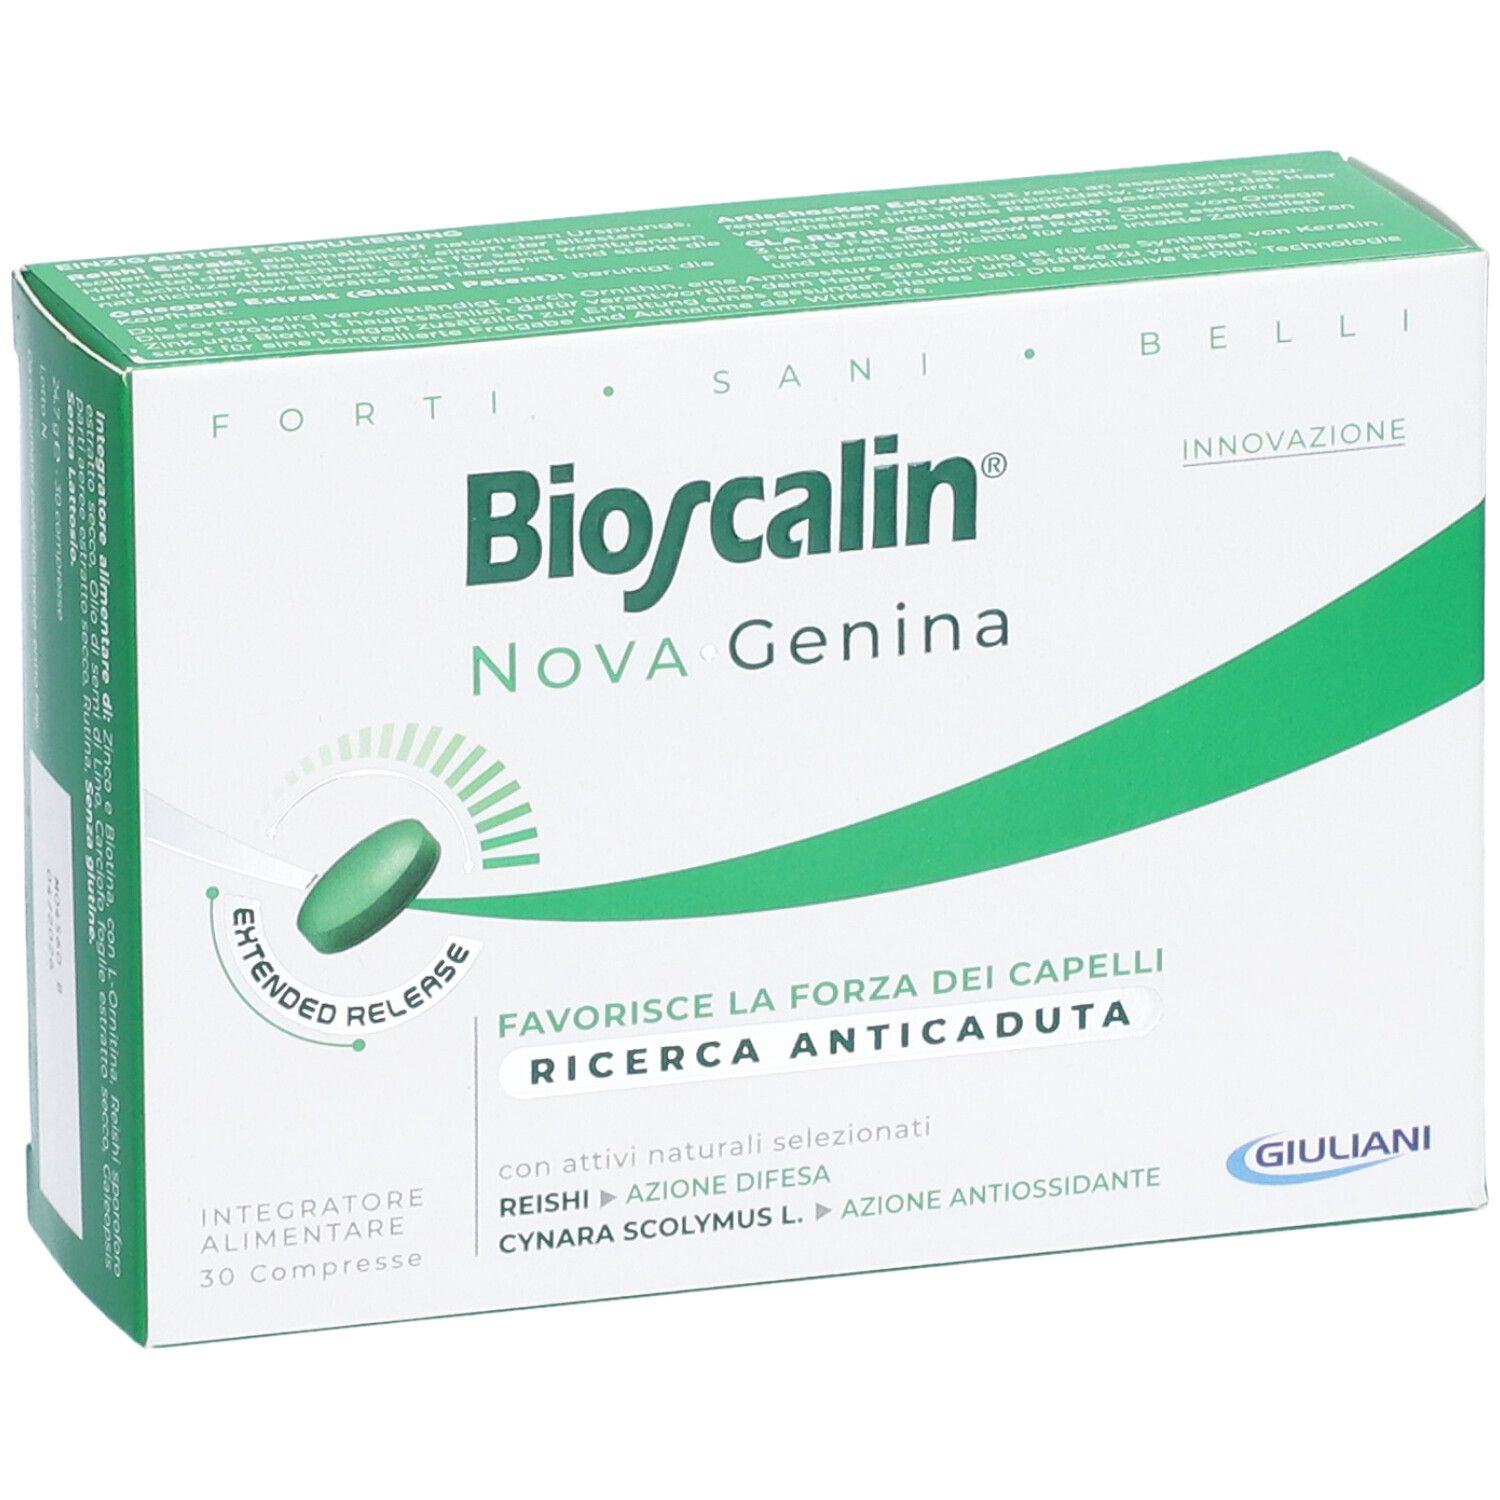 Bioscalin® Nova Genina